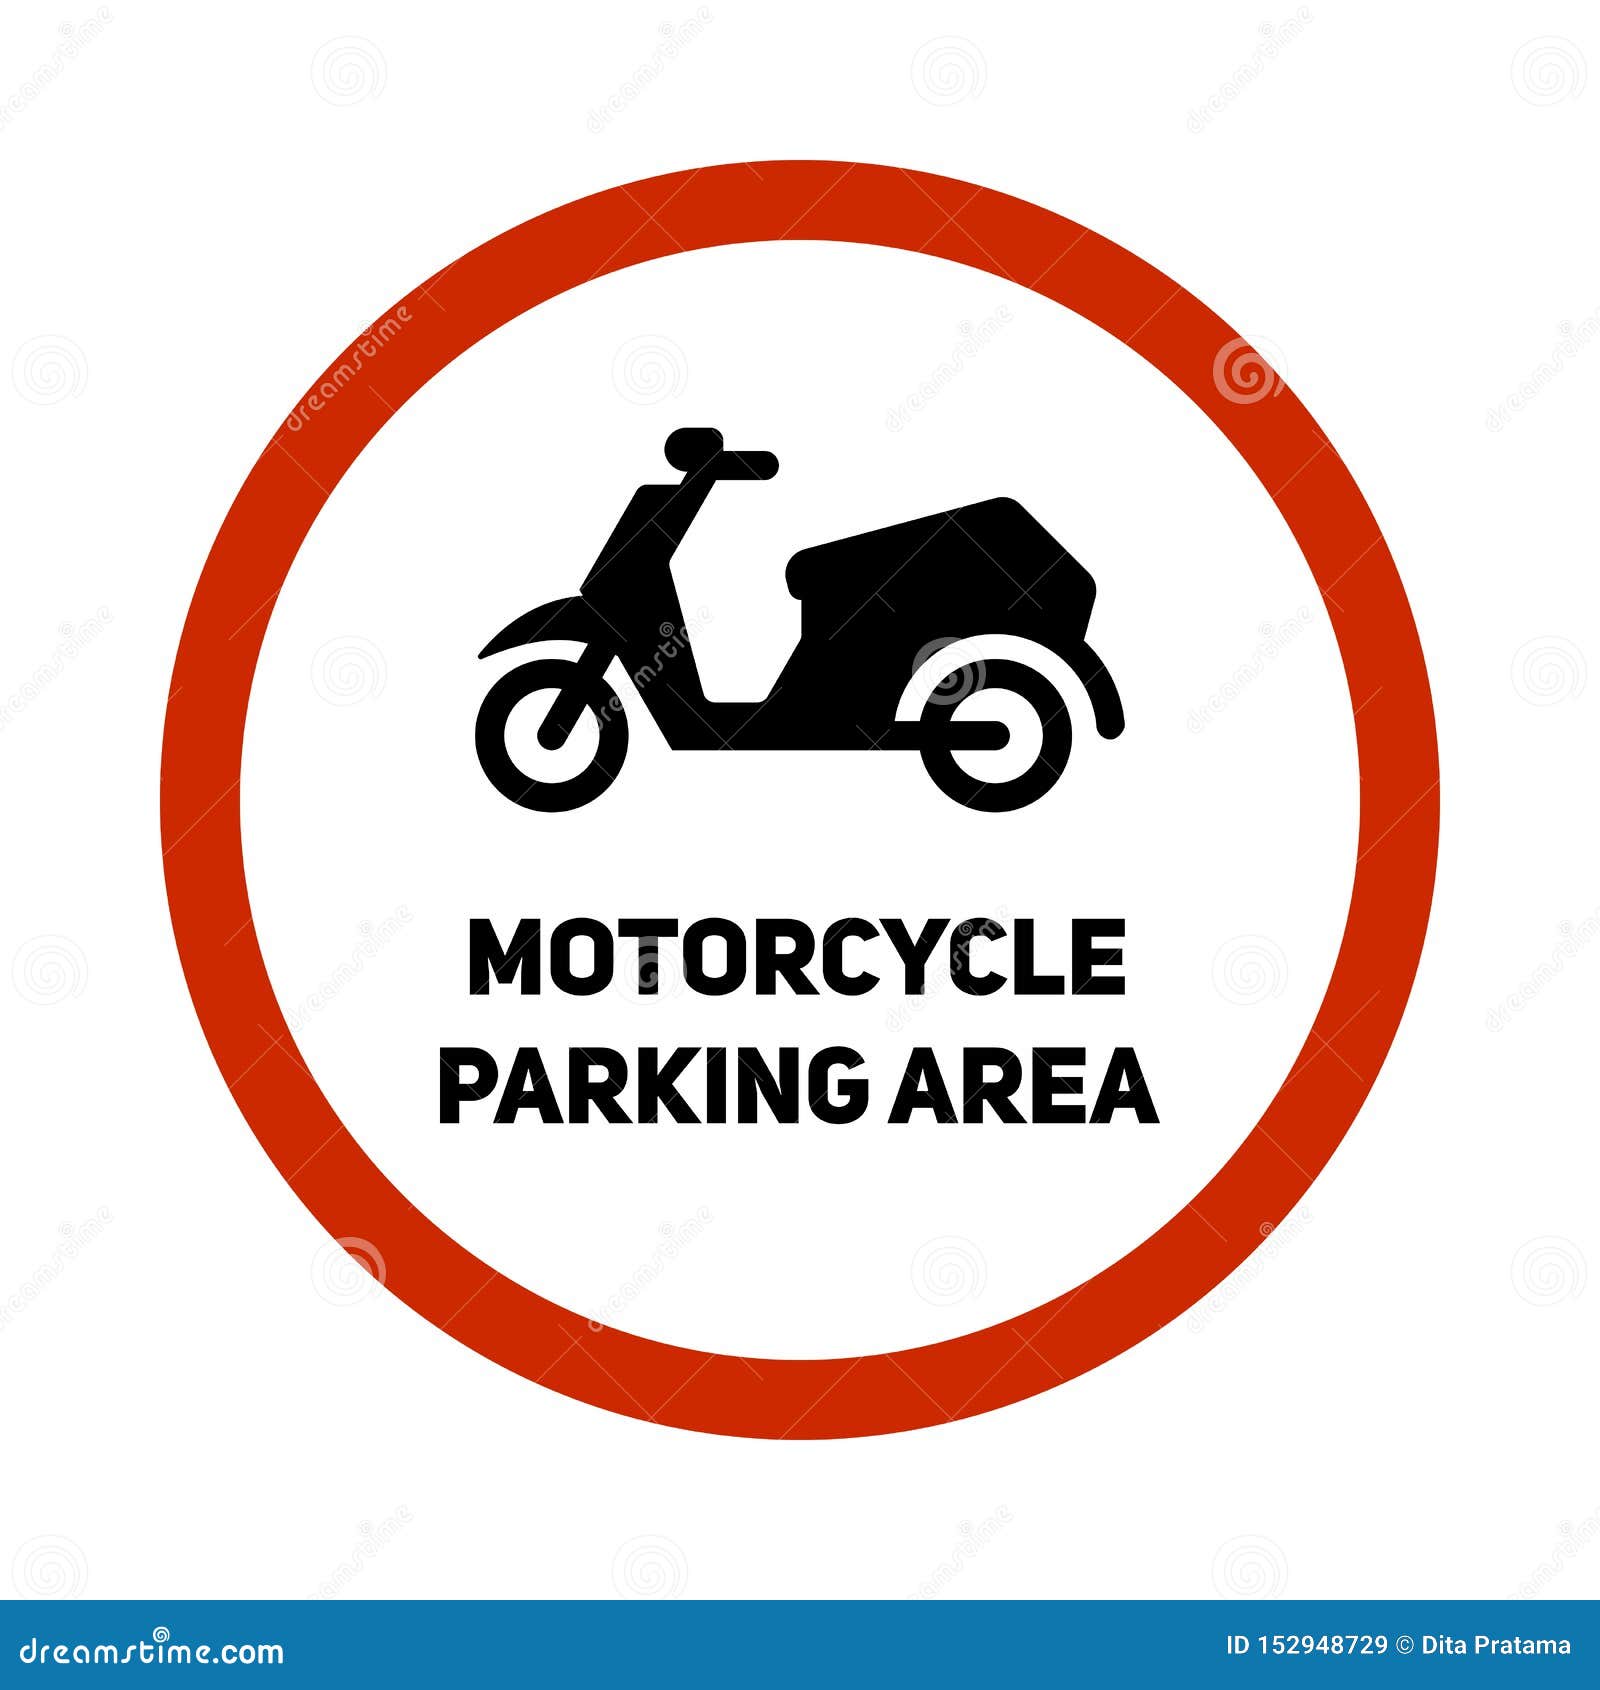 Можно ли парковать мотоцикл. Стоянка для мотоцикла знак. Табличка стоянка для мотоциклов. Знак парковка только для мотоциклов. Трафарет мотоцикла на парковку.